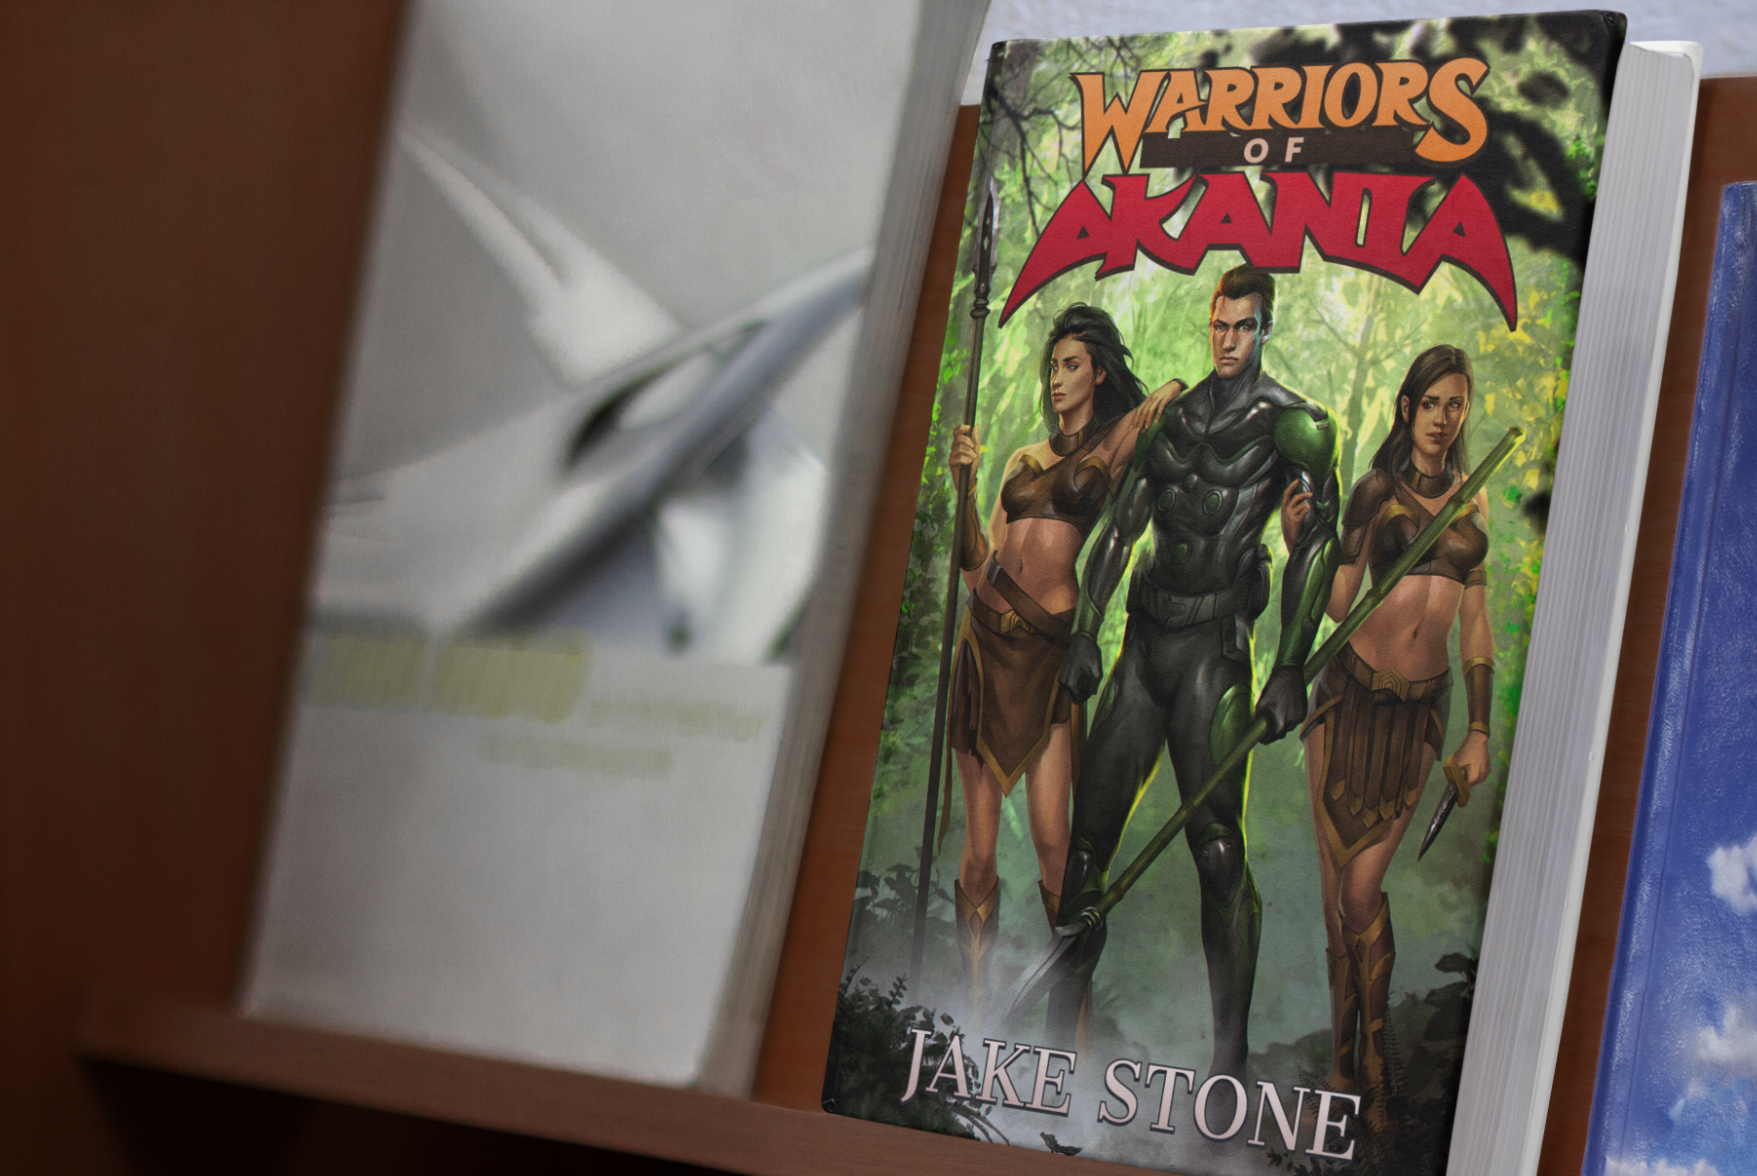 Warriors of Akania on a book shelf